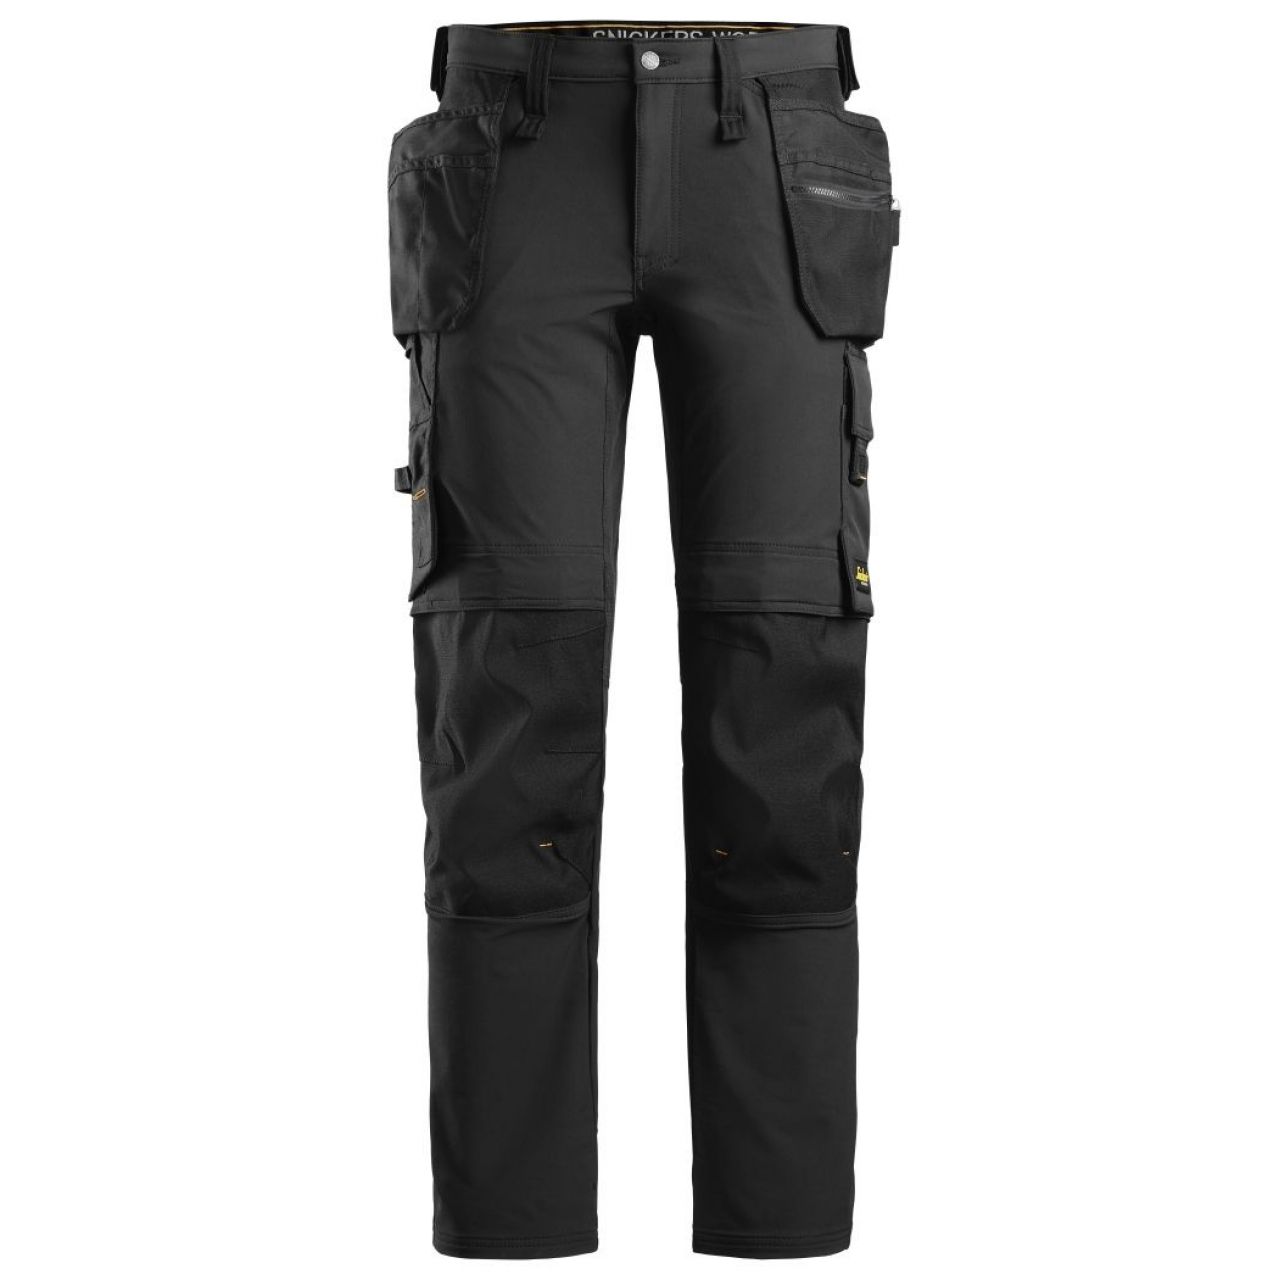 Pantalon elastico AllroundWork bolsillos flotantes negro talla 054